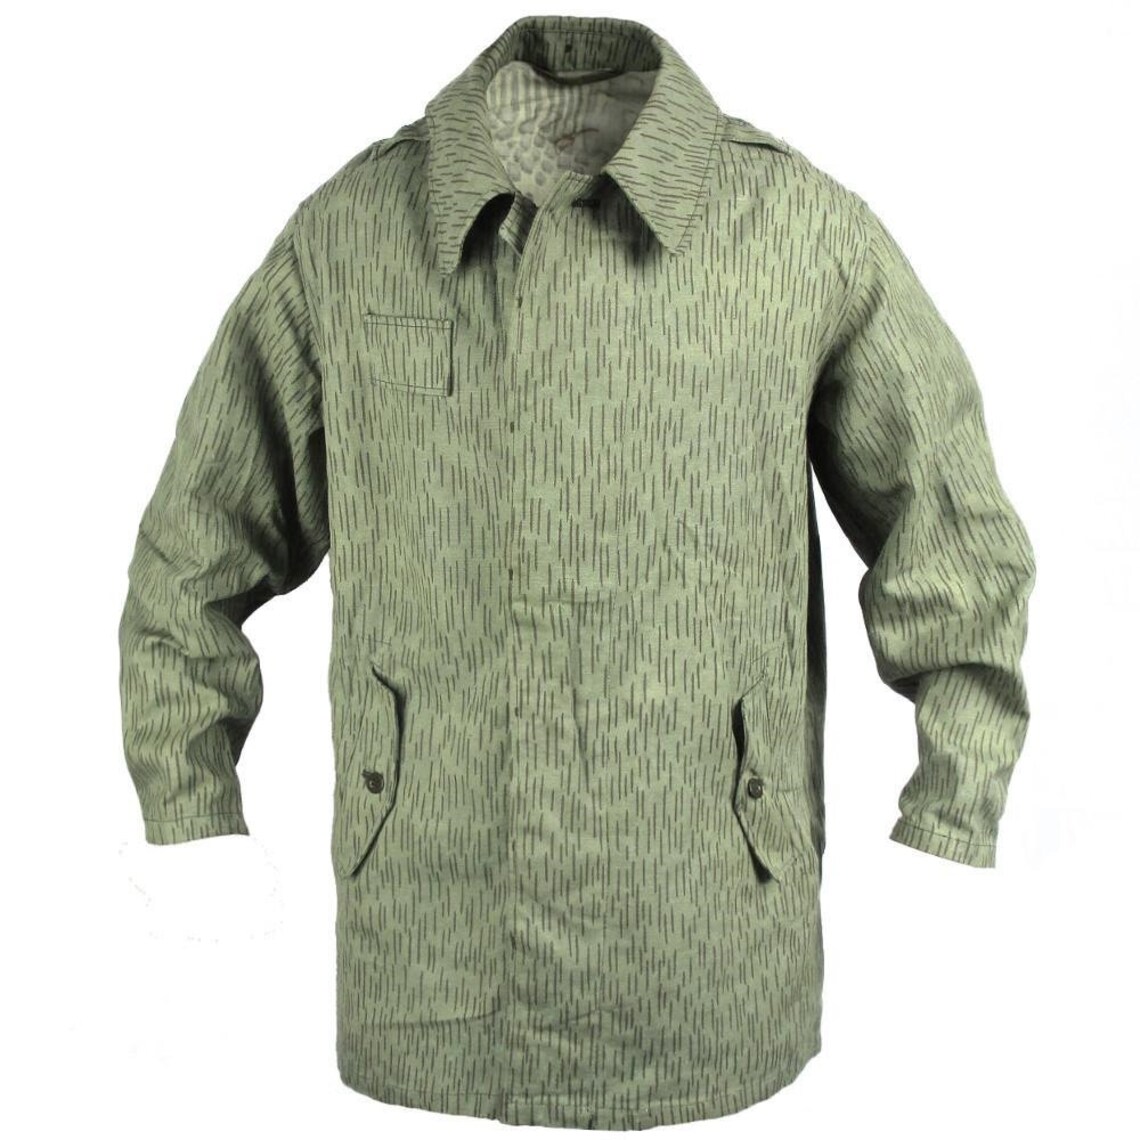 Vintage Czech army m60 raindrop camo field parka jacket | Etsy